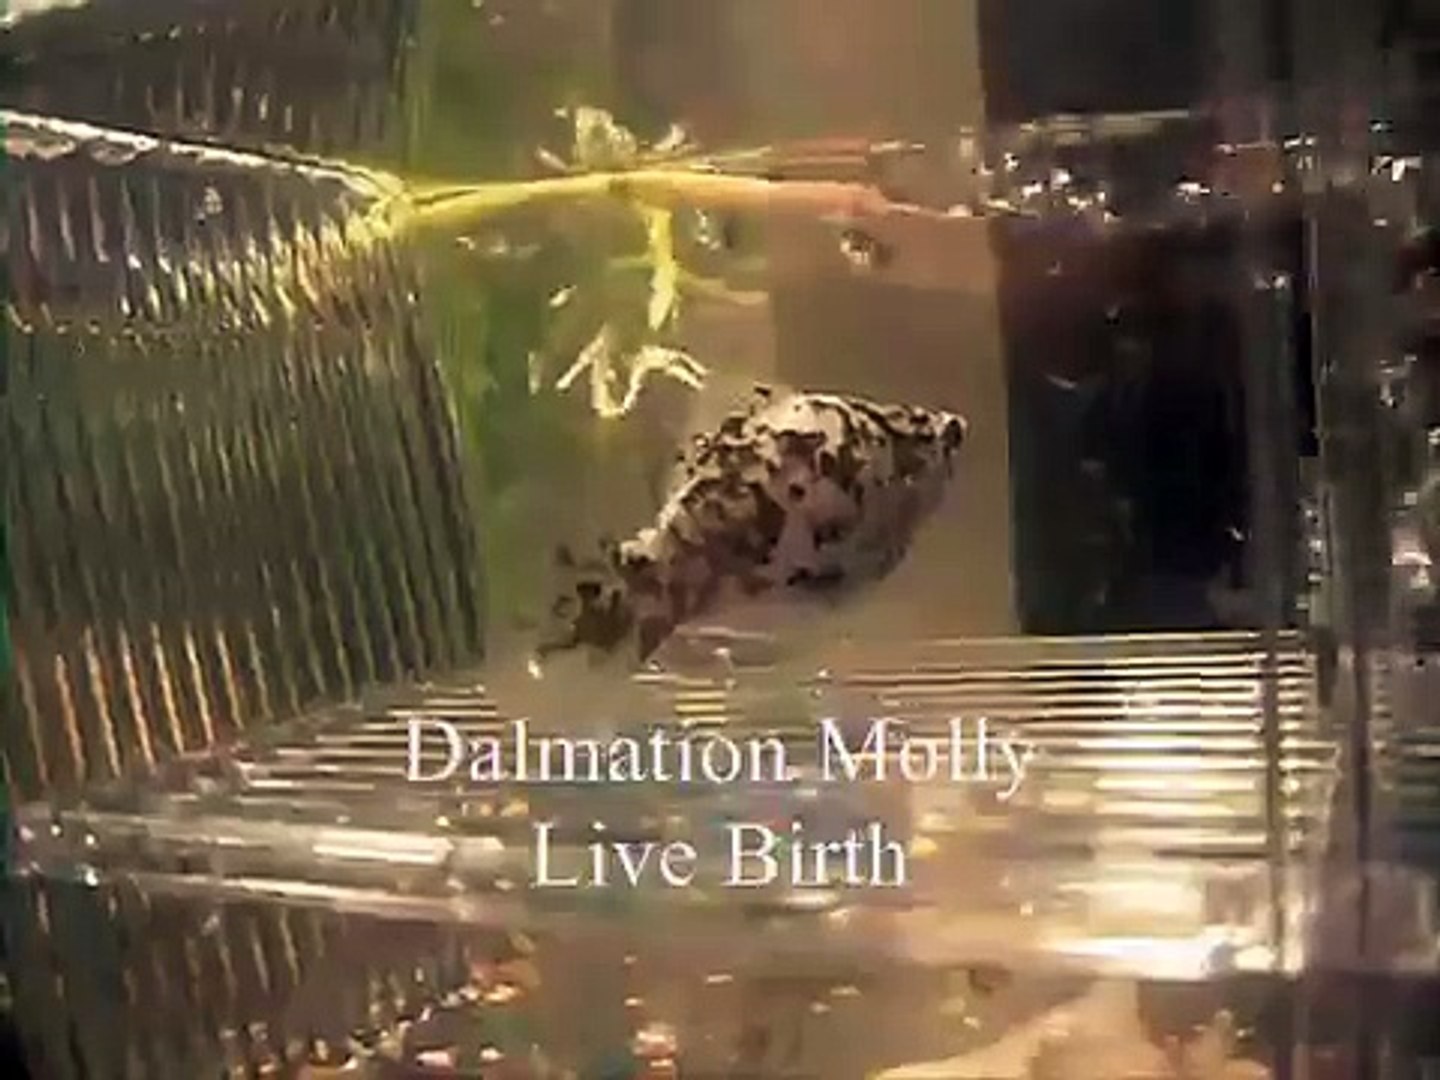 Dalmatian Molly giving birth - video Dailymotion